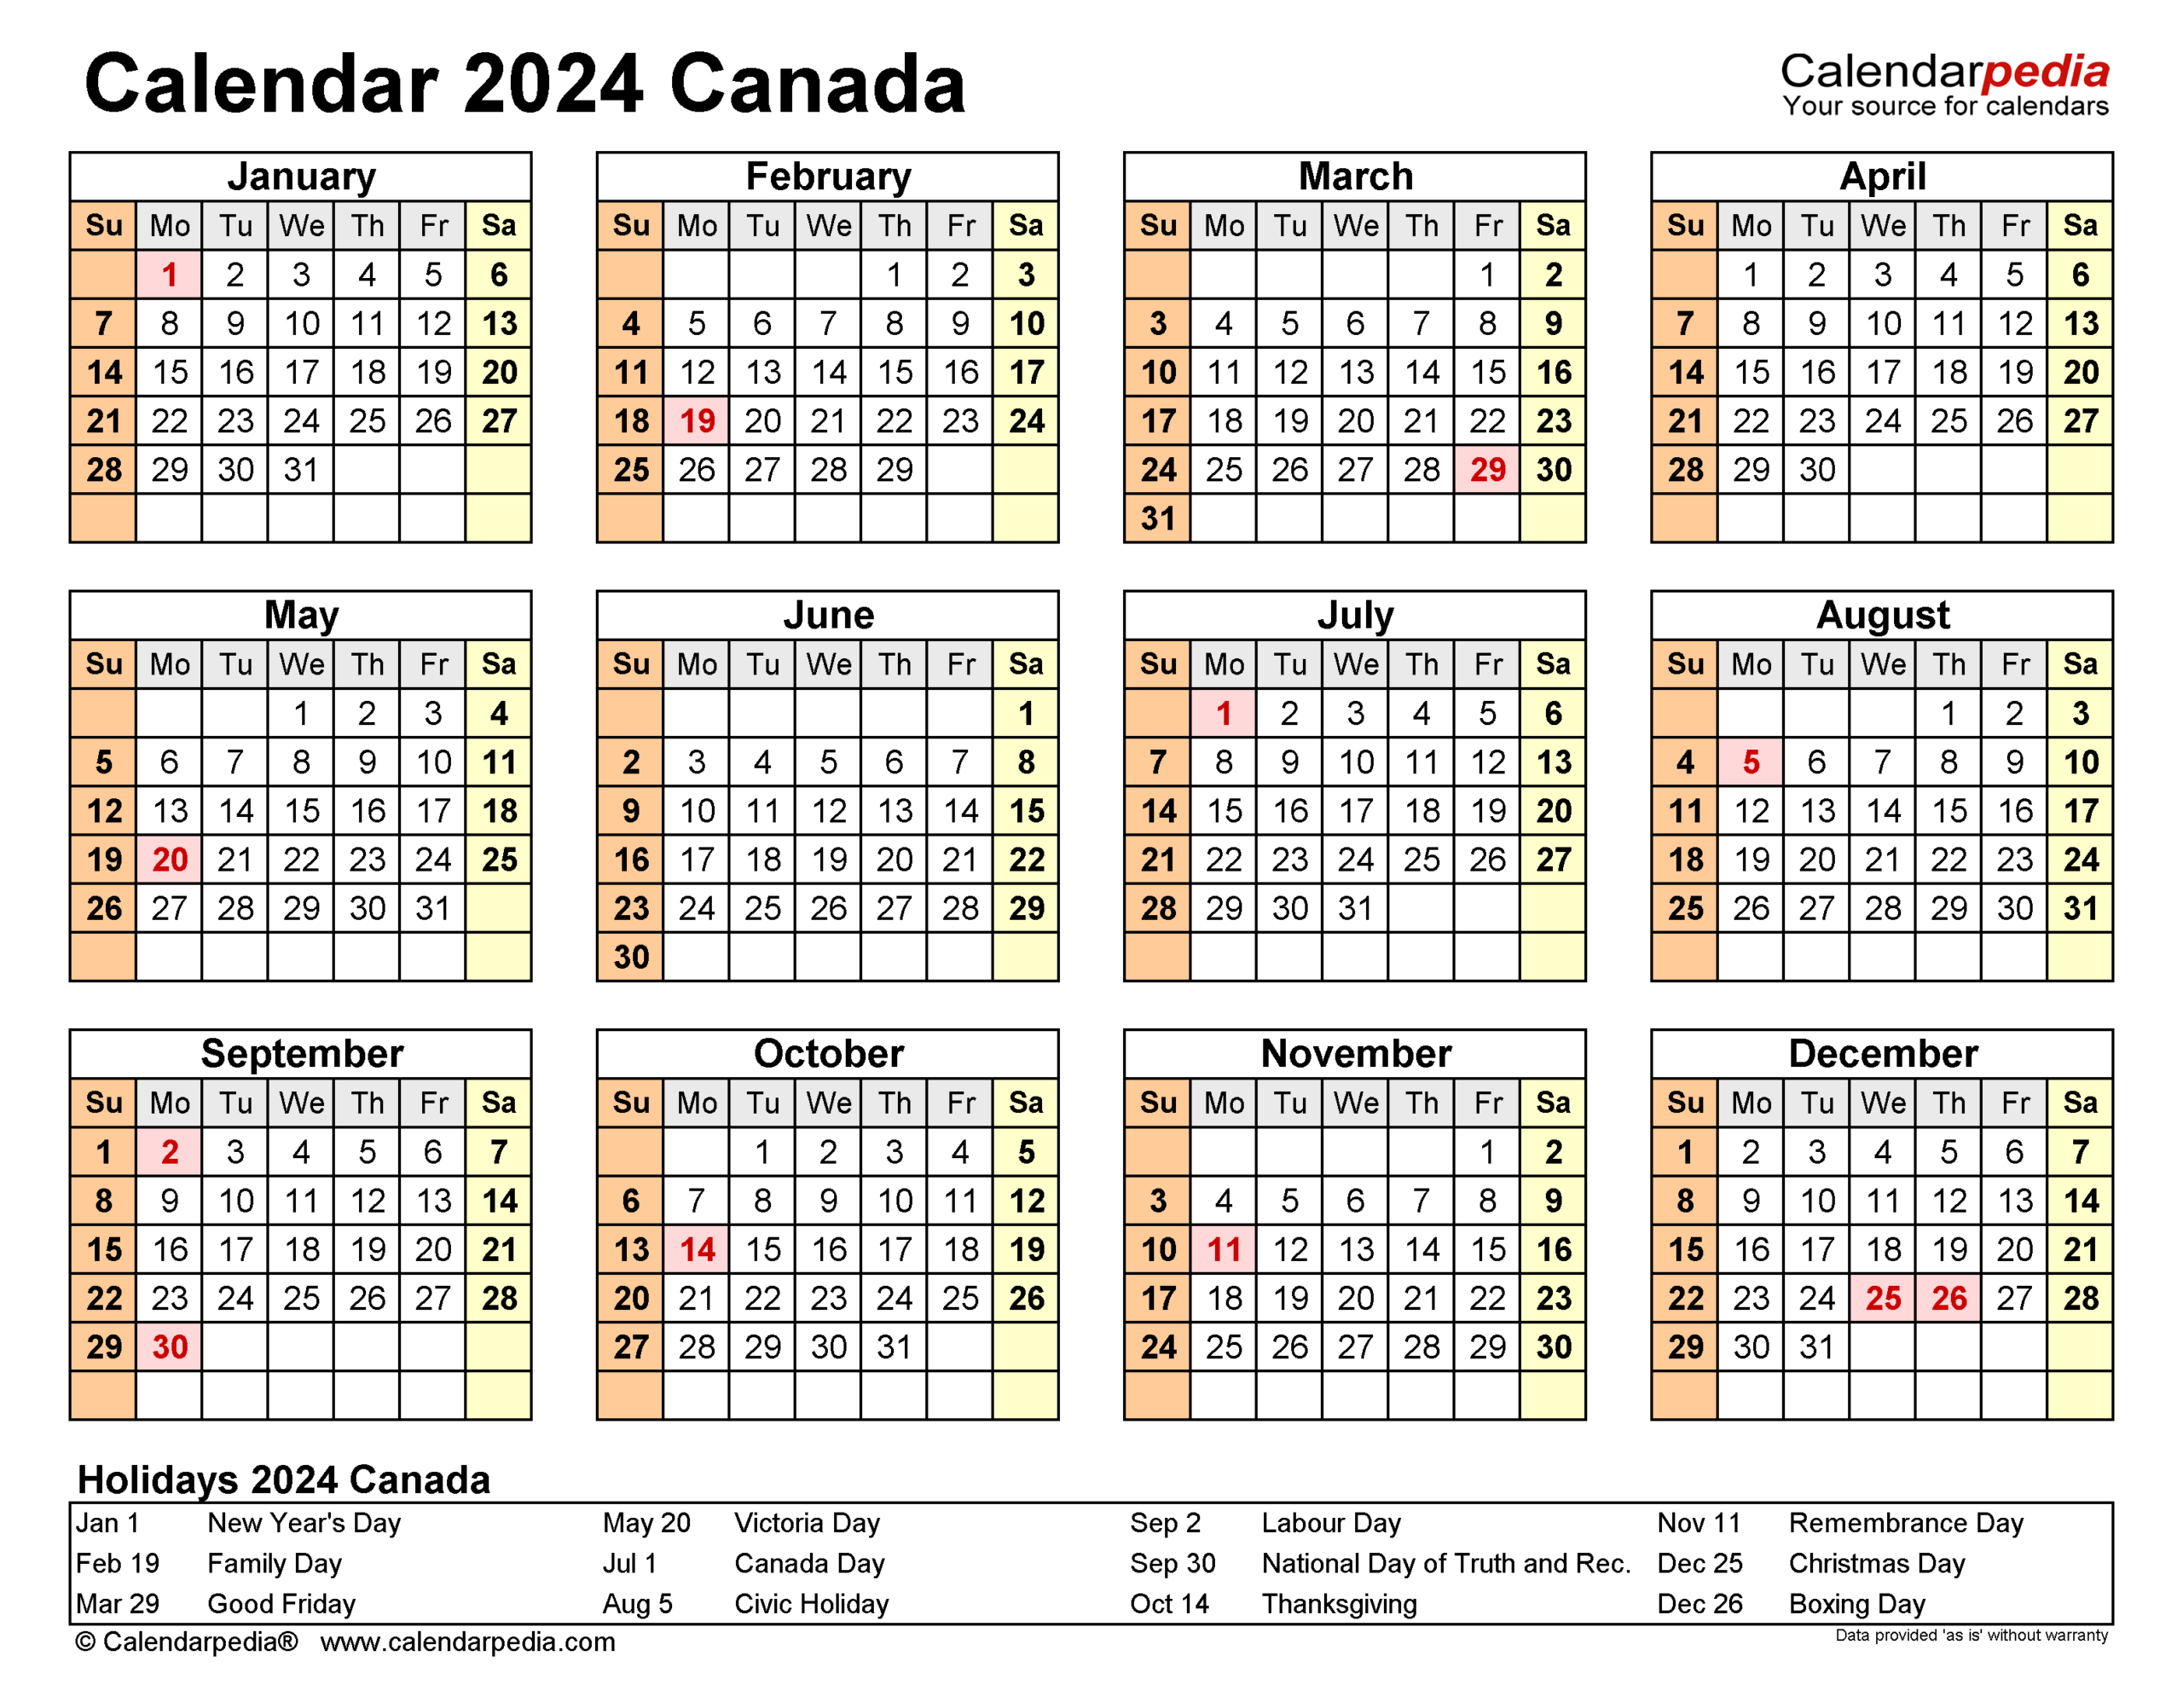 Canada Calendar 2024 - Free Printable Pdf Templates within Free Printable Calendar 2024 Canada With Holidays